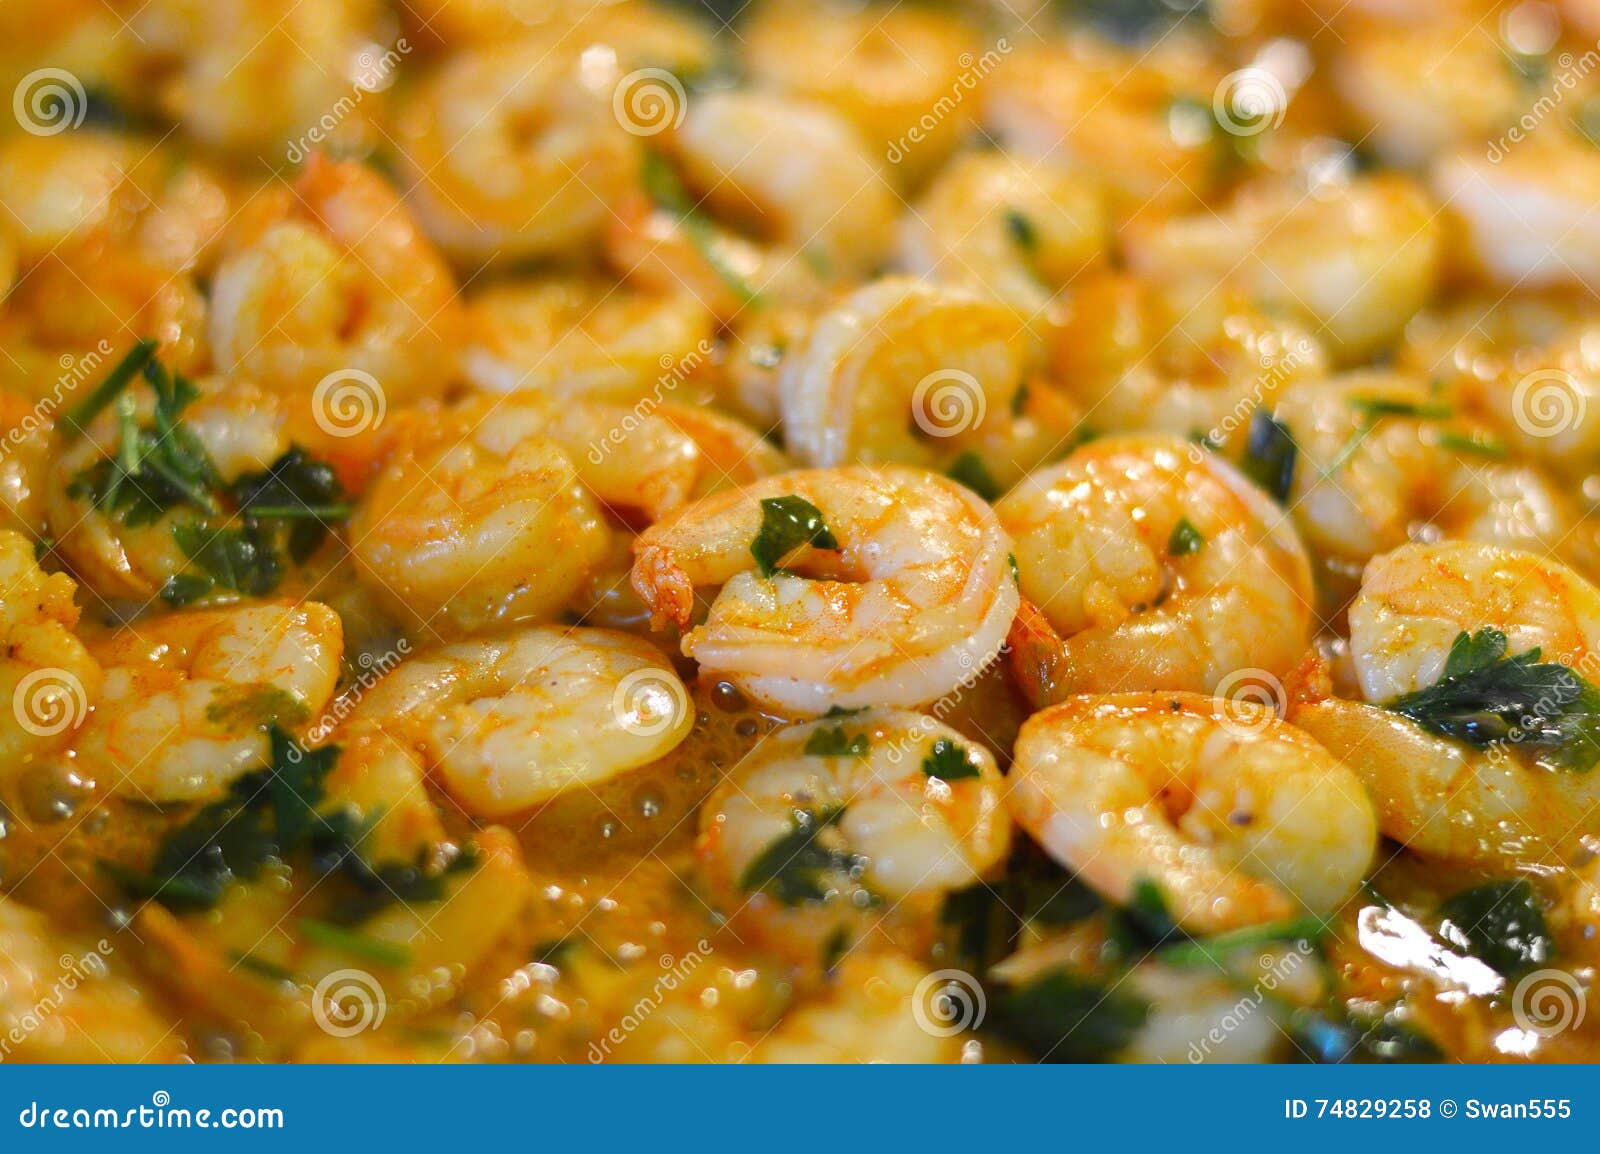 fresh cooked shrimp